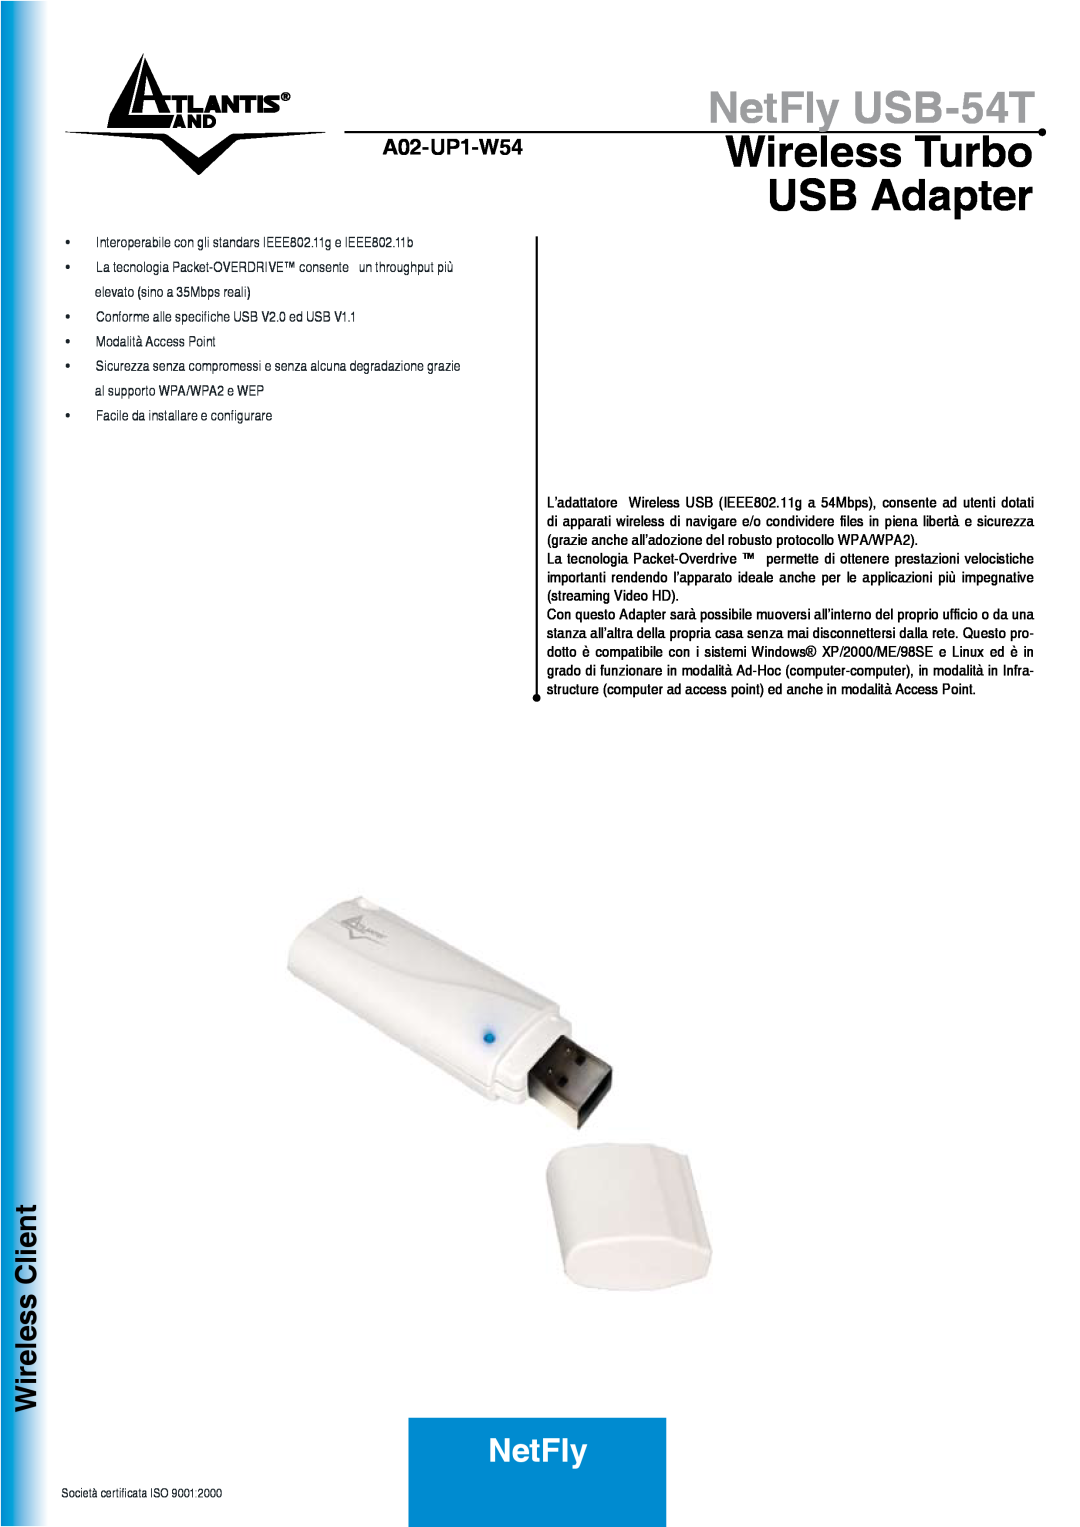 Atlantis Land NetFly USB-54T manual A02-UP1-W54Wireless Turbo USB Adapter, Facile da installare e configurare 